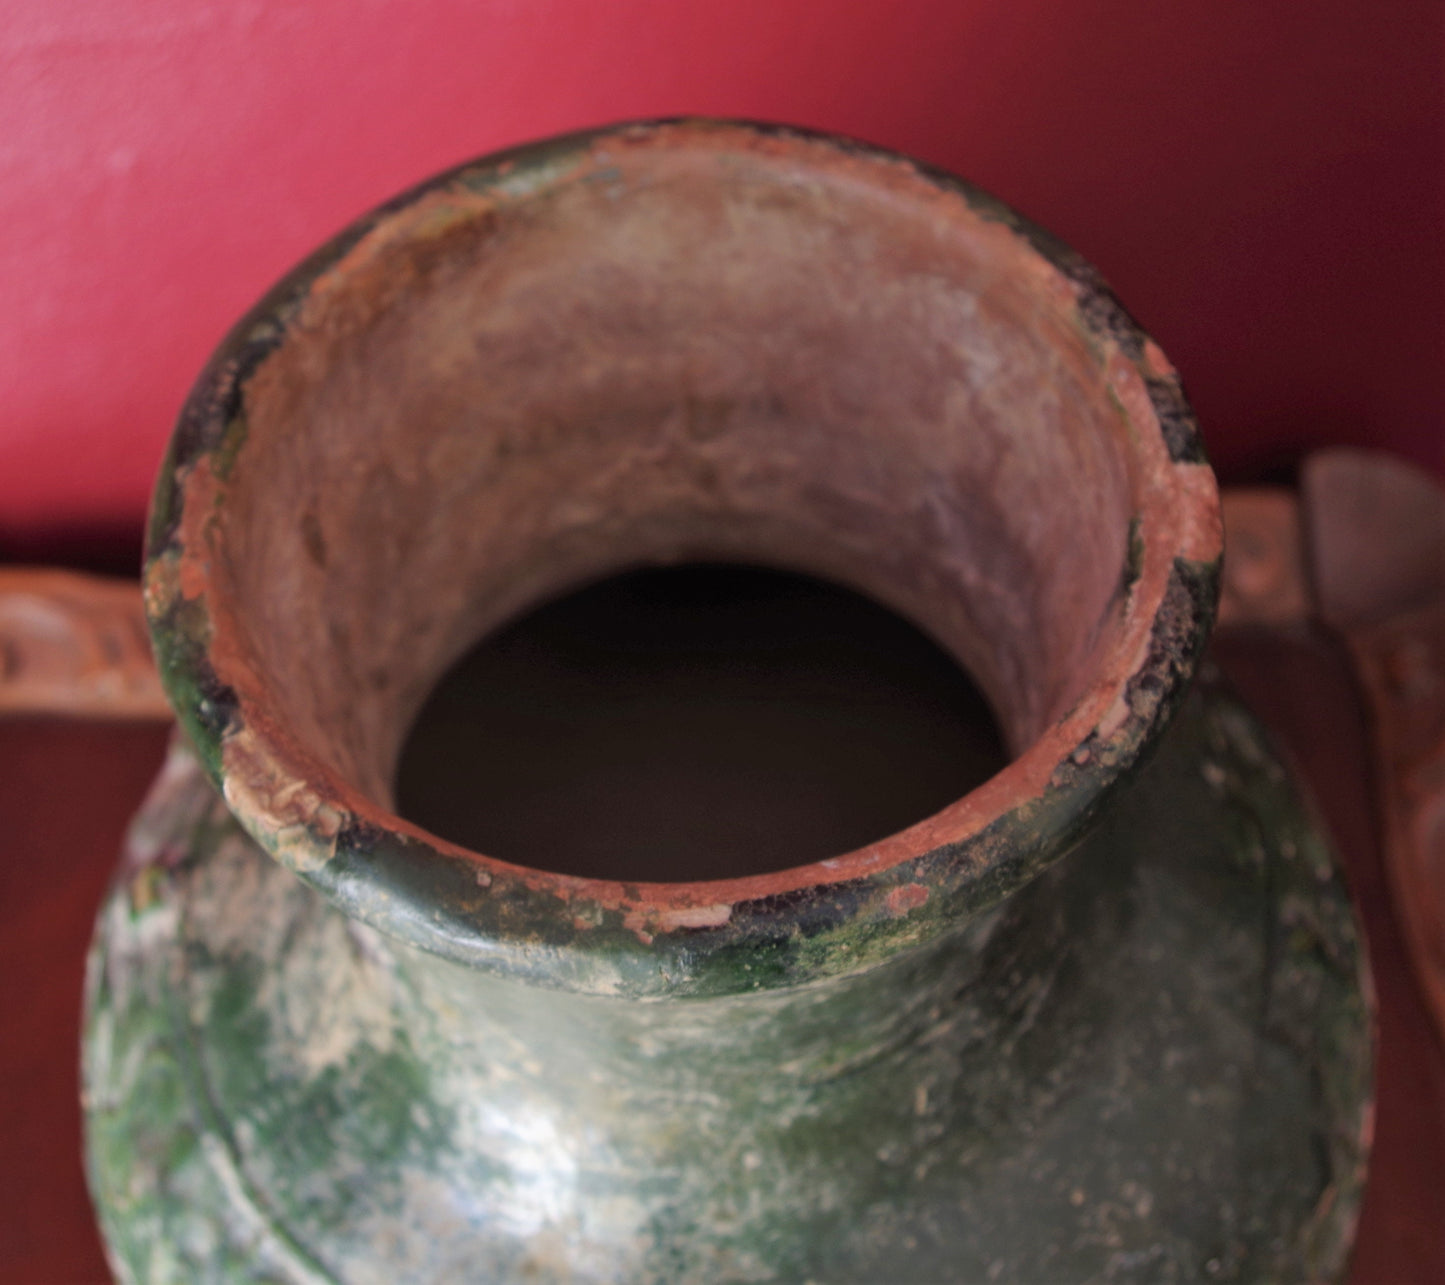 Authentic Han Dynasty (206 BC-220 AD) Green Glazed "Hu" Pottery Jar